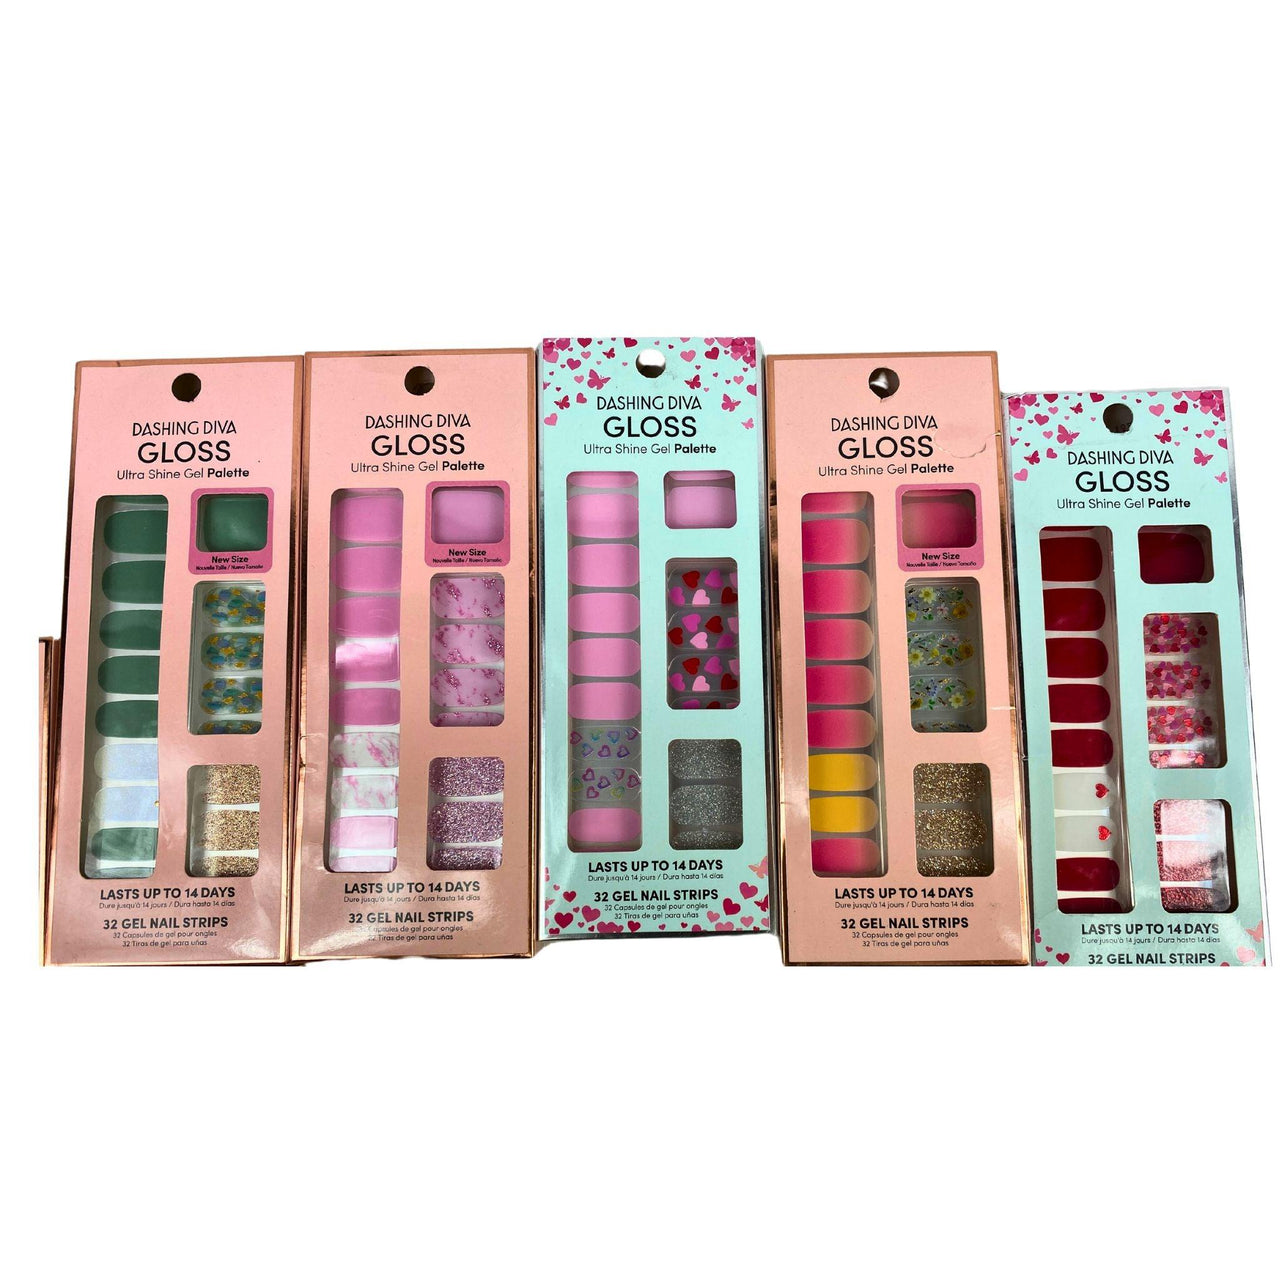 Dashing Diva Gloss MIX Ultra Shine Gel Palette 32 Gel Nail Strips (50 Pcs Lot) - Discount Wholesalers Inc